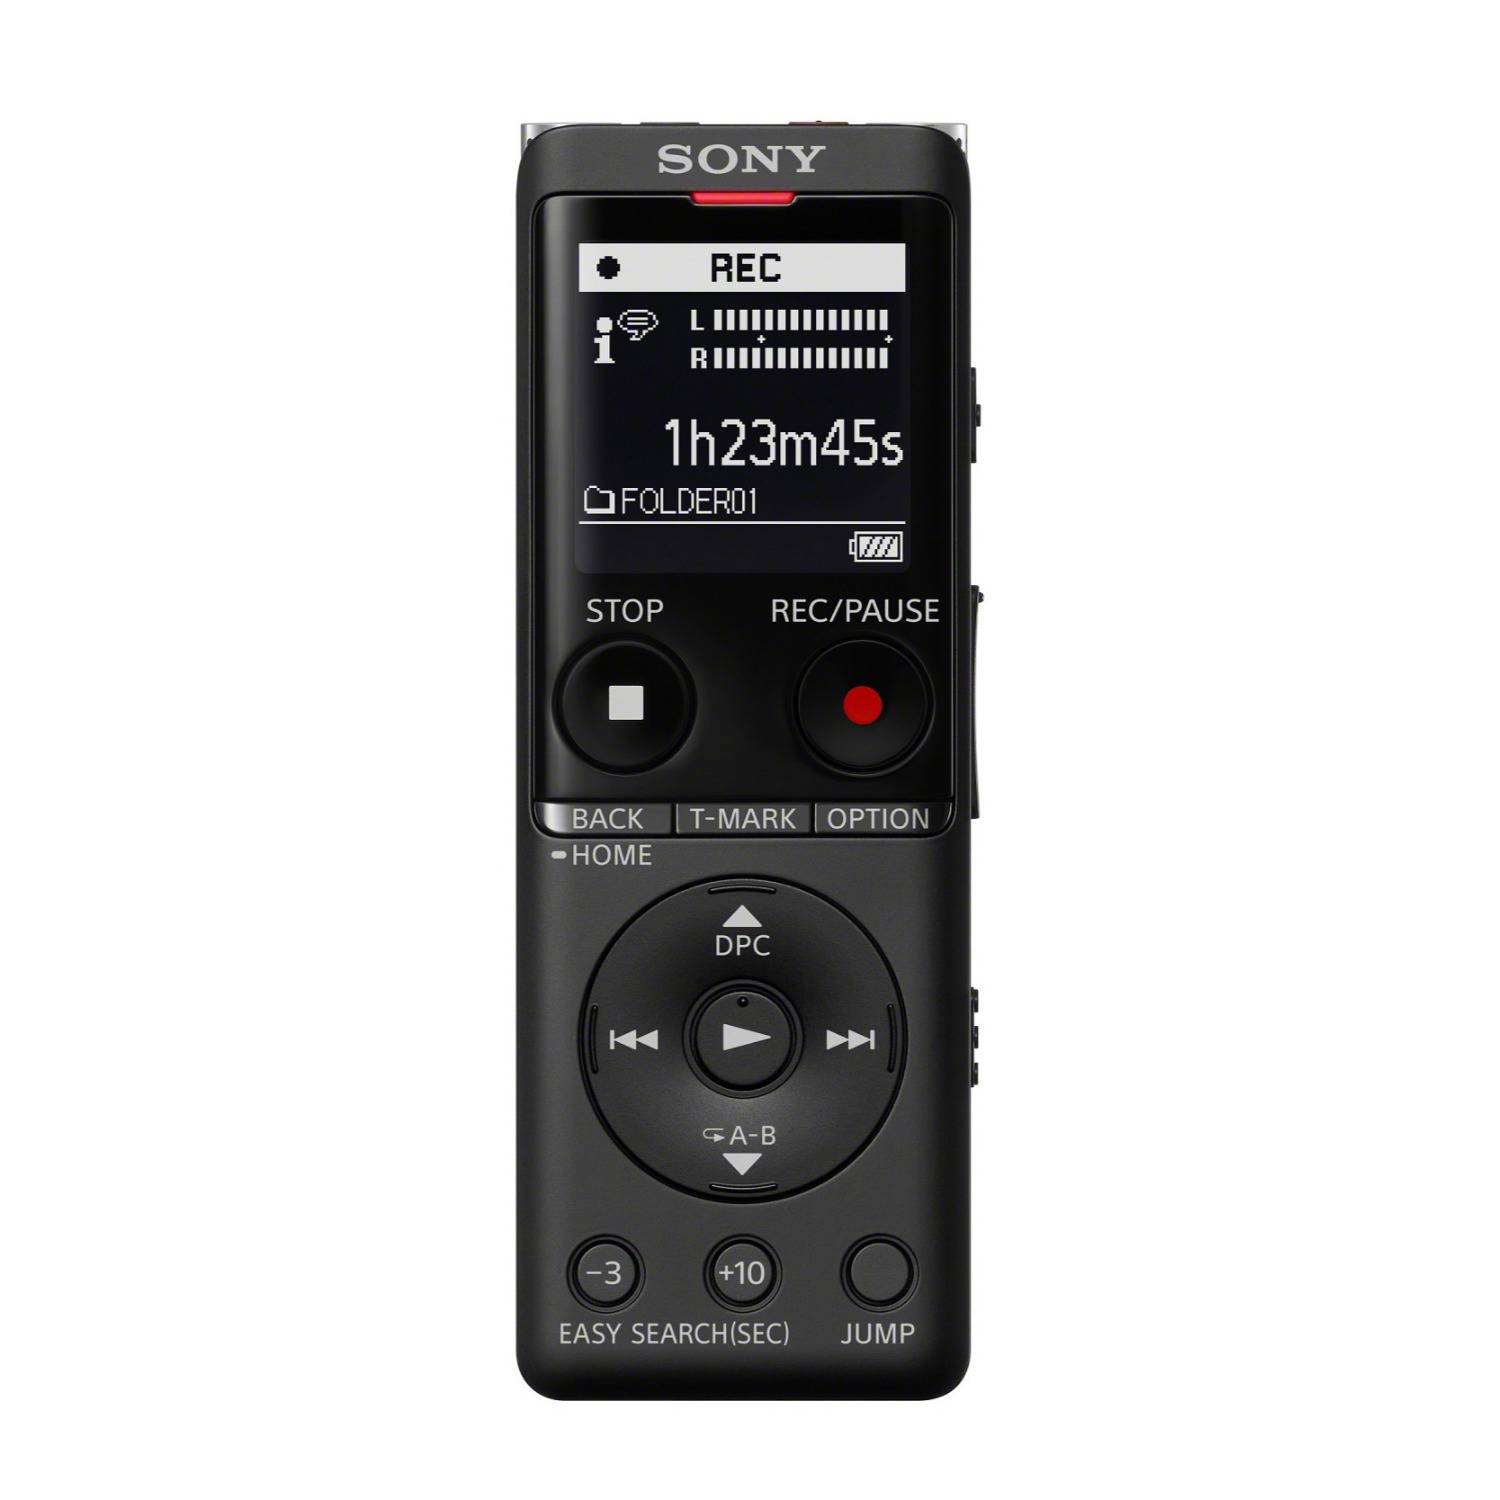 Sony ICD-UX570 Series UX570 Digital Voice Recorder (Black)